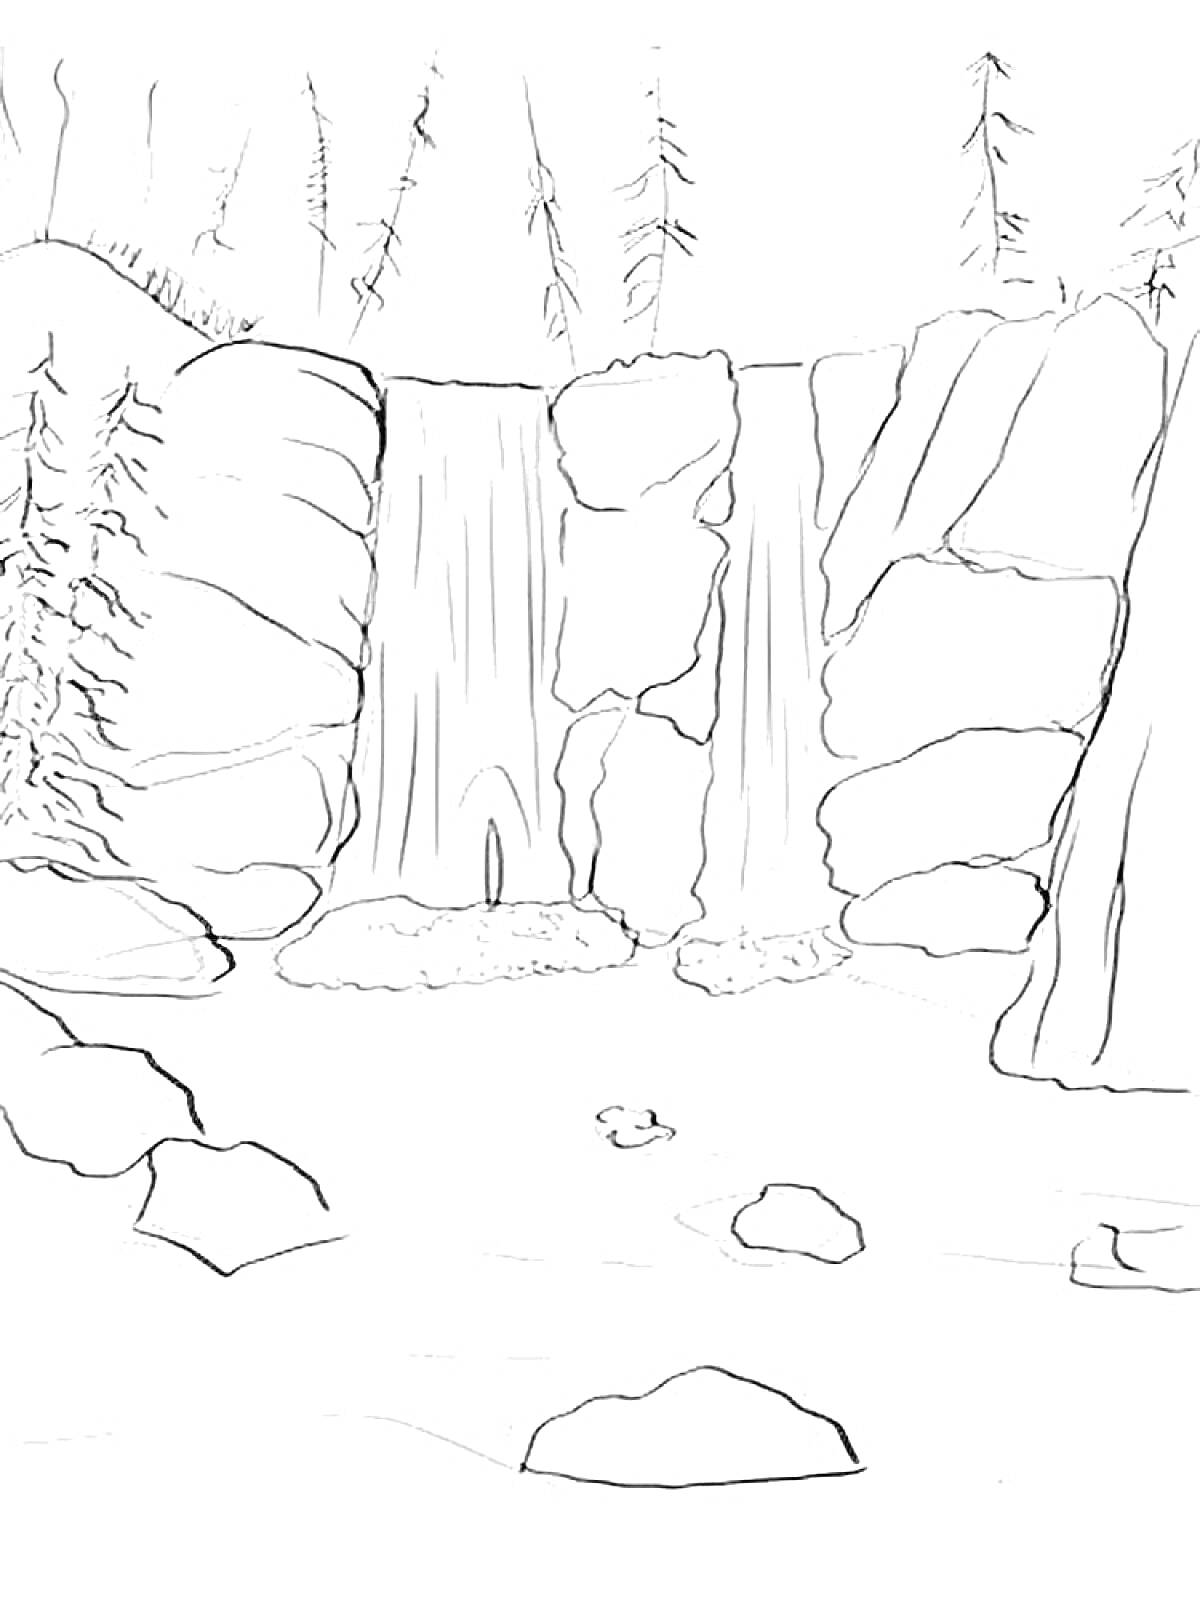 Водопад с камнями, деревьями и скалами